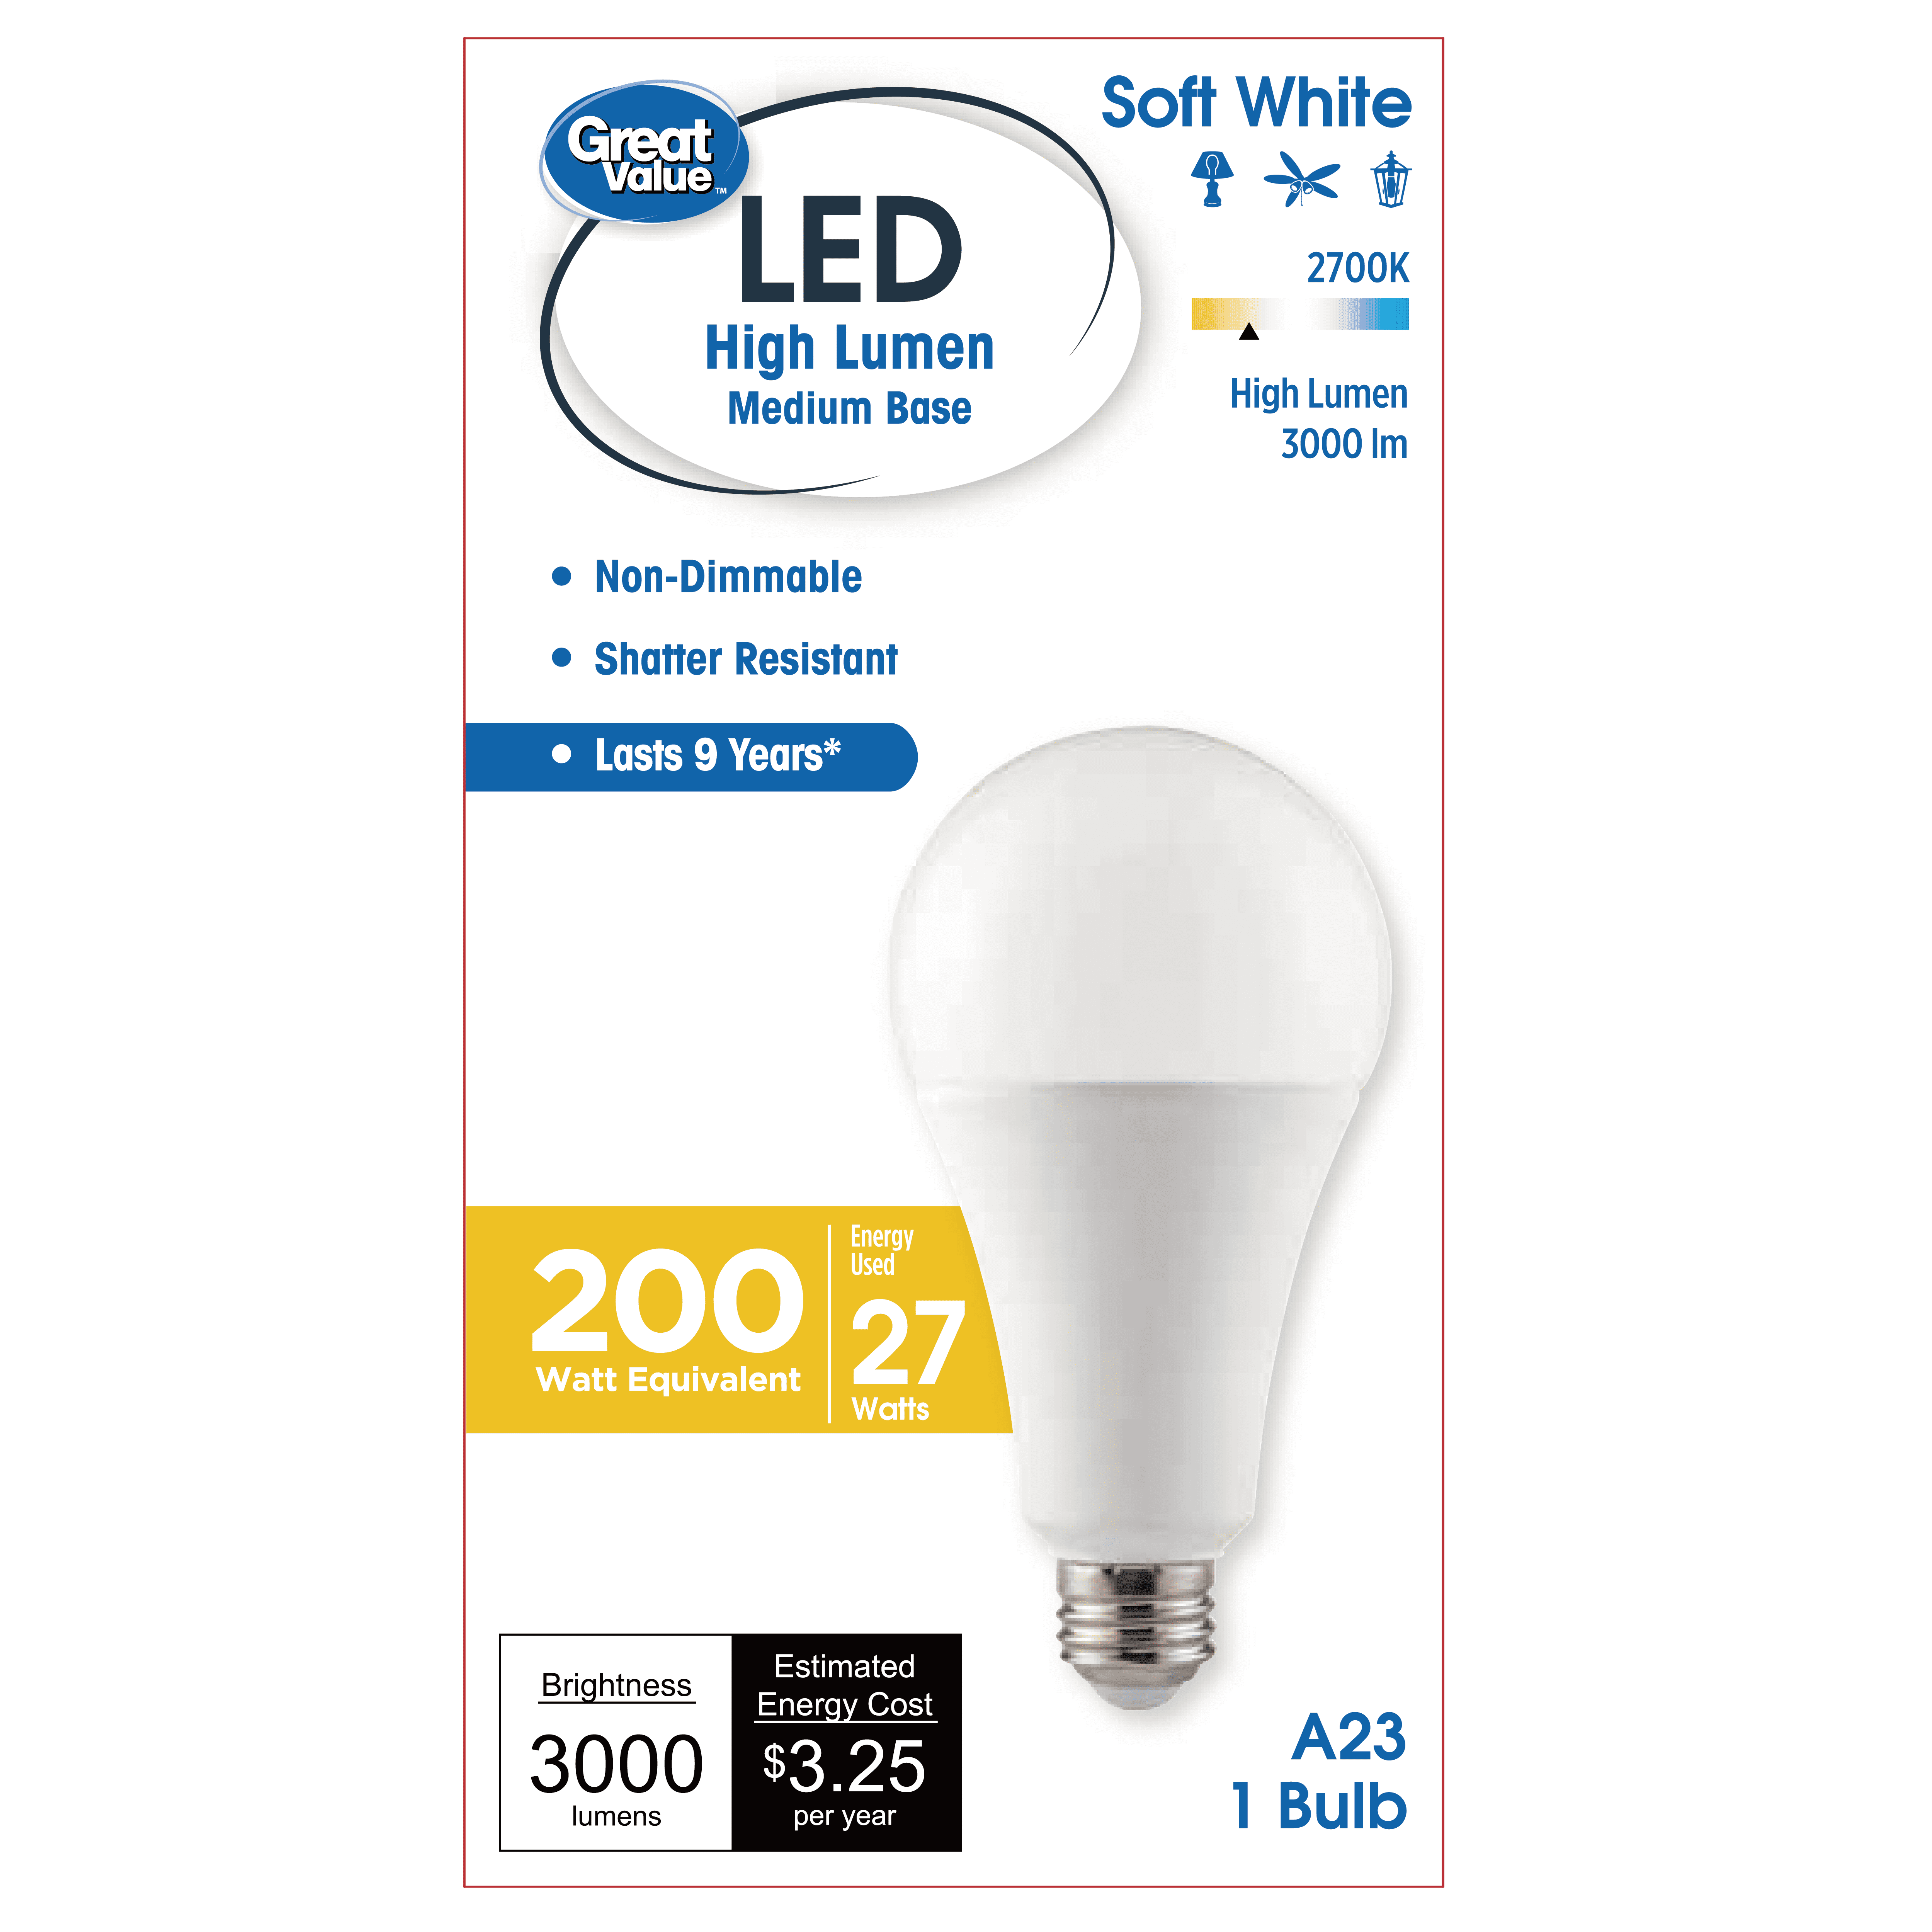 Groet Metalen lijn Validatie Great Value LED Frosted Light Bulb,A23 200 Watts Soft White High Lumens  Bulb,Medium Base,Non Dimmable,1 Pack - Walmart.com